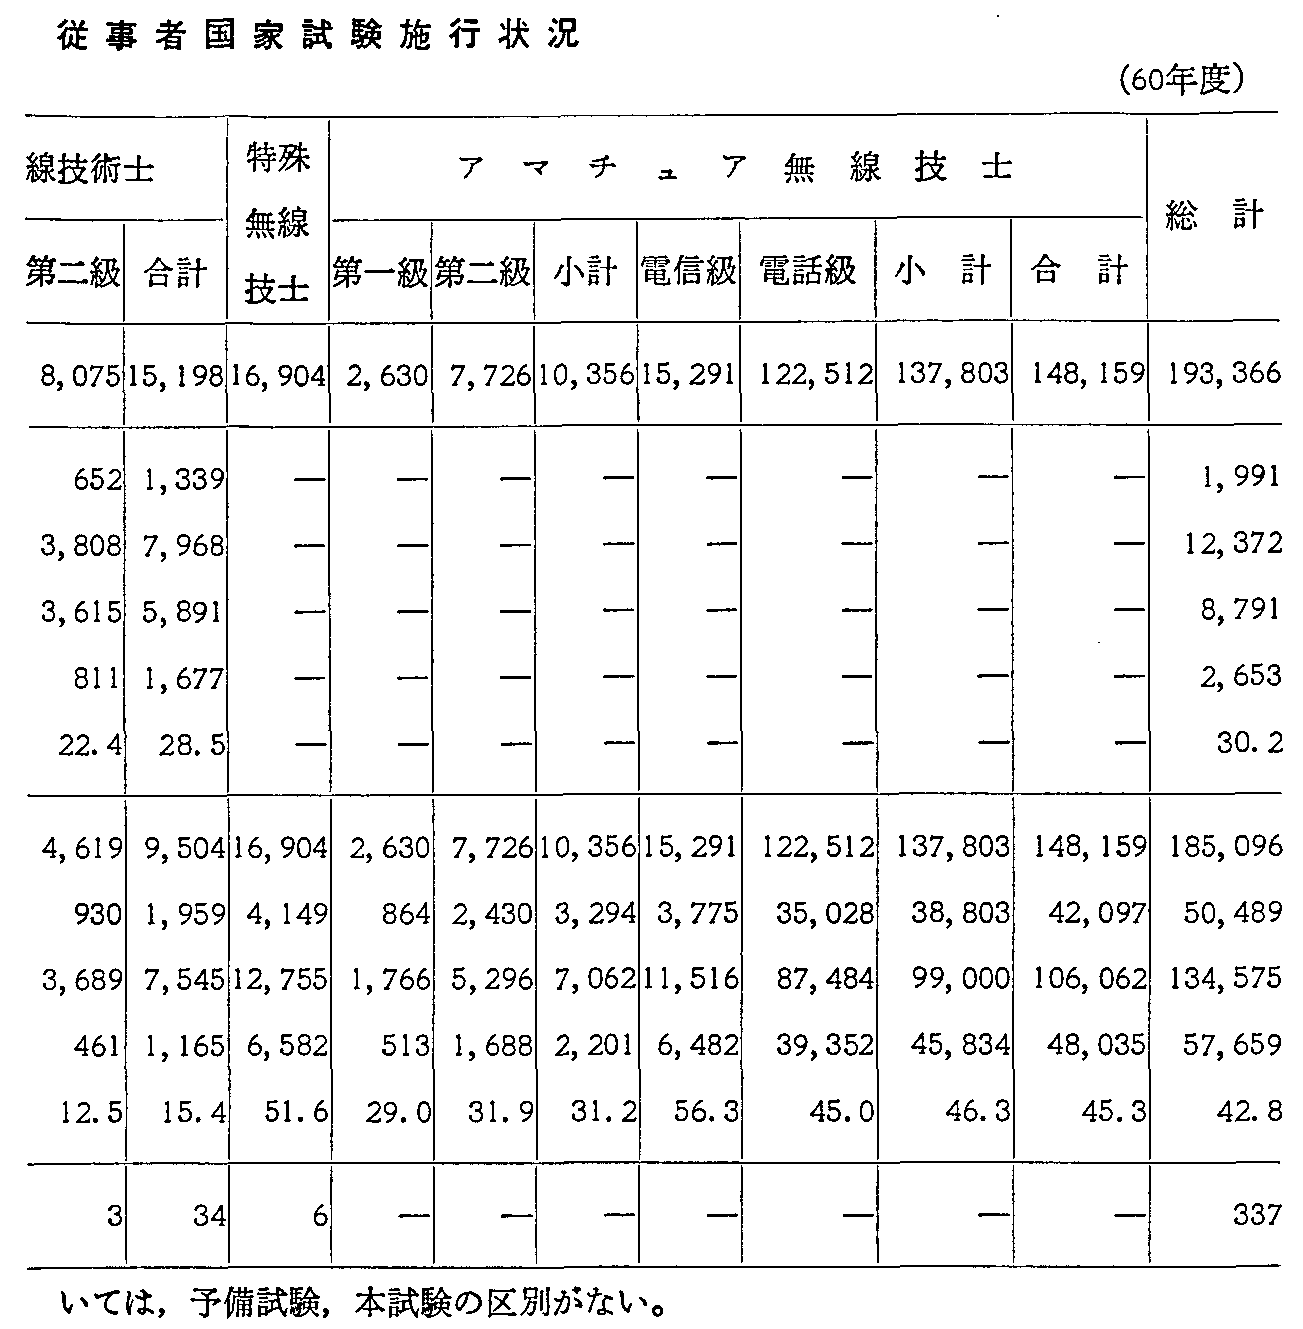 5-21 iʖ]ҍƎ{s(60Nx)(2)